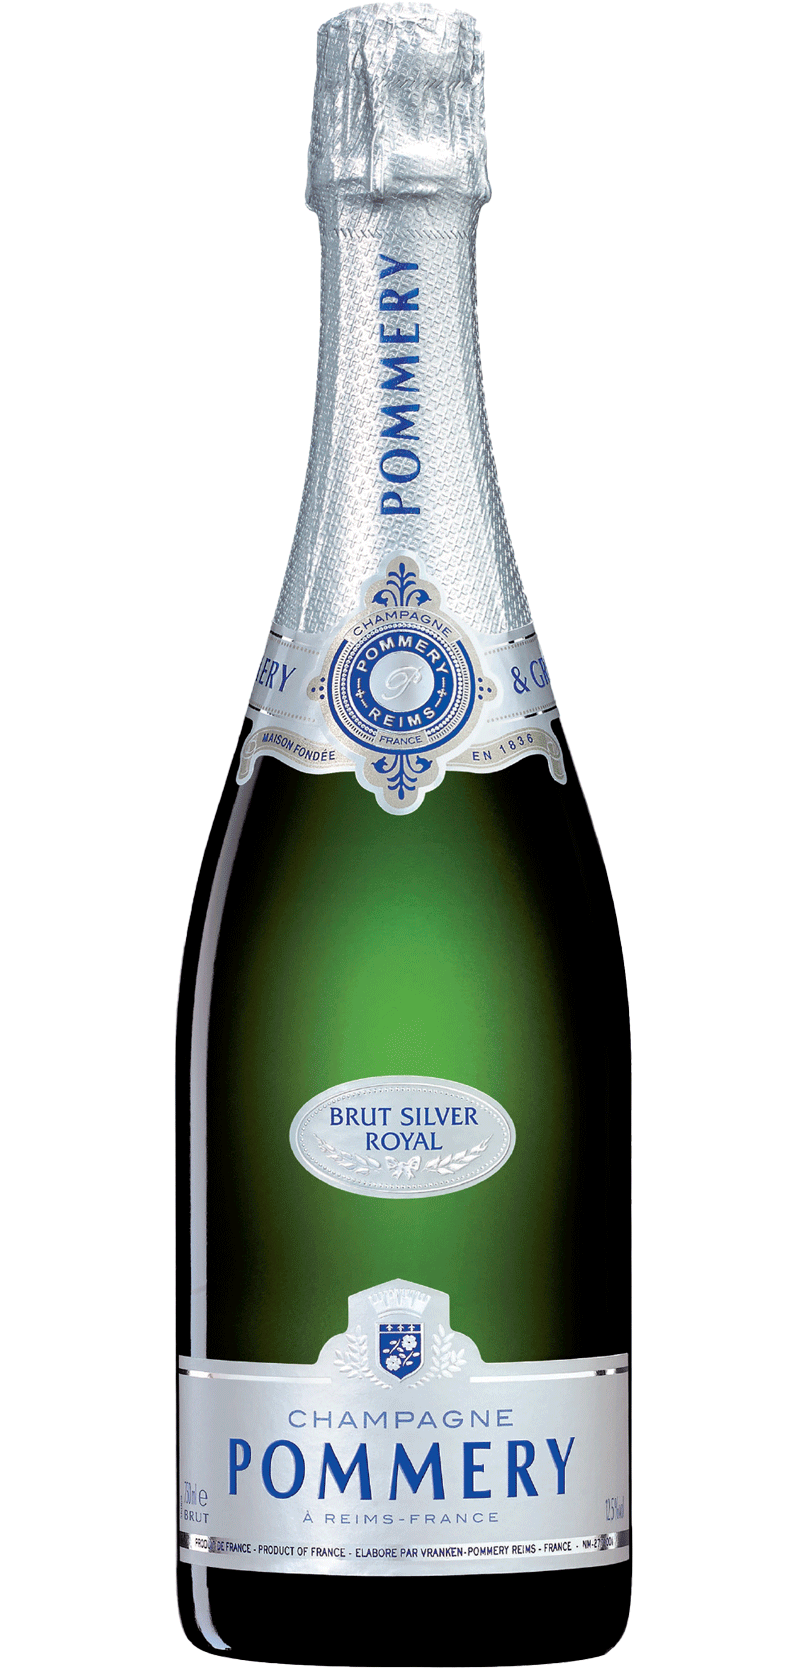 Pommery - Royal Brut Silver - Champagne